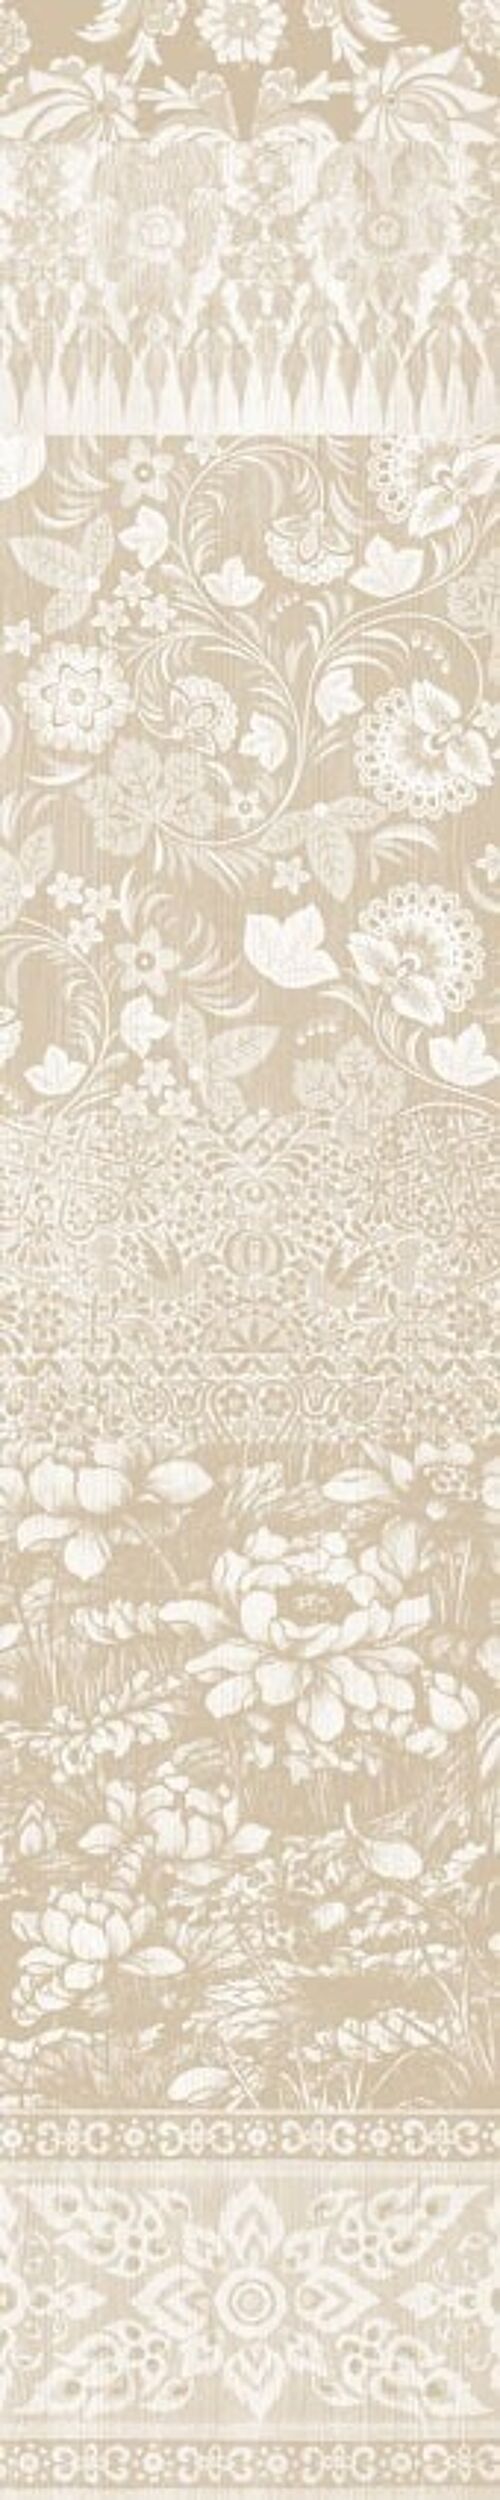 Arts & Crafts Patchwork Wallpaper - Beige - Panel A